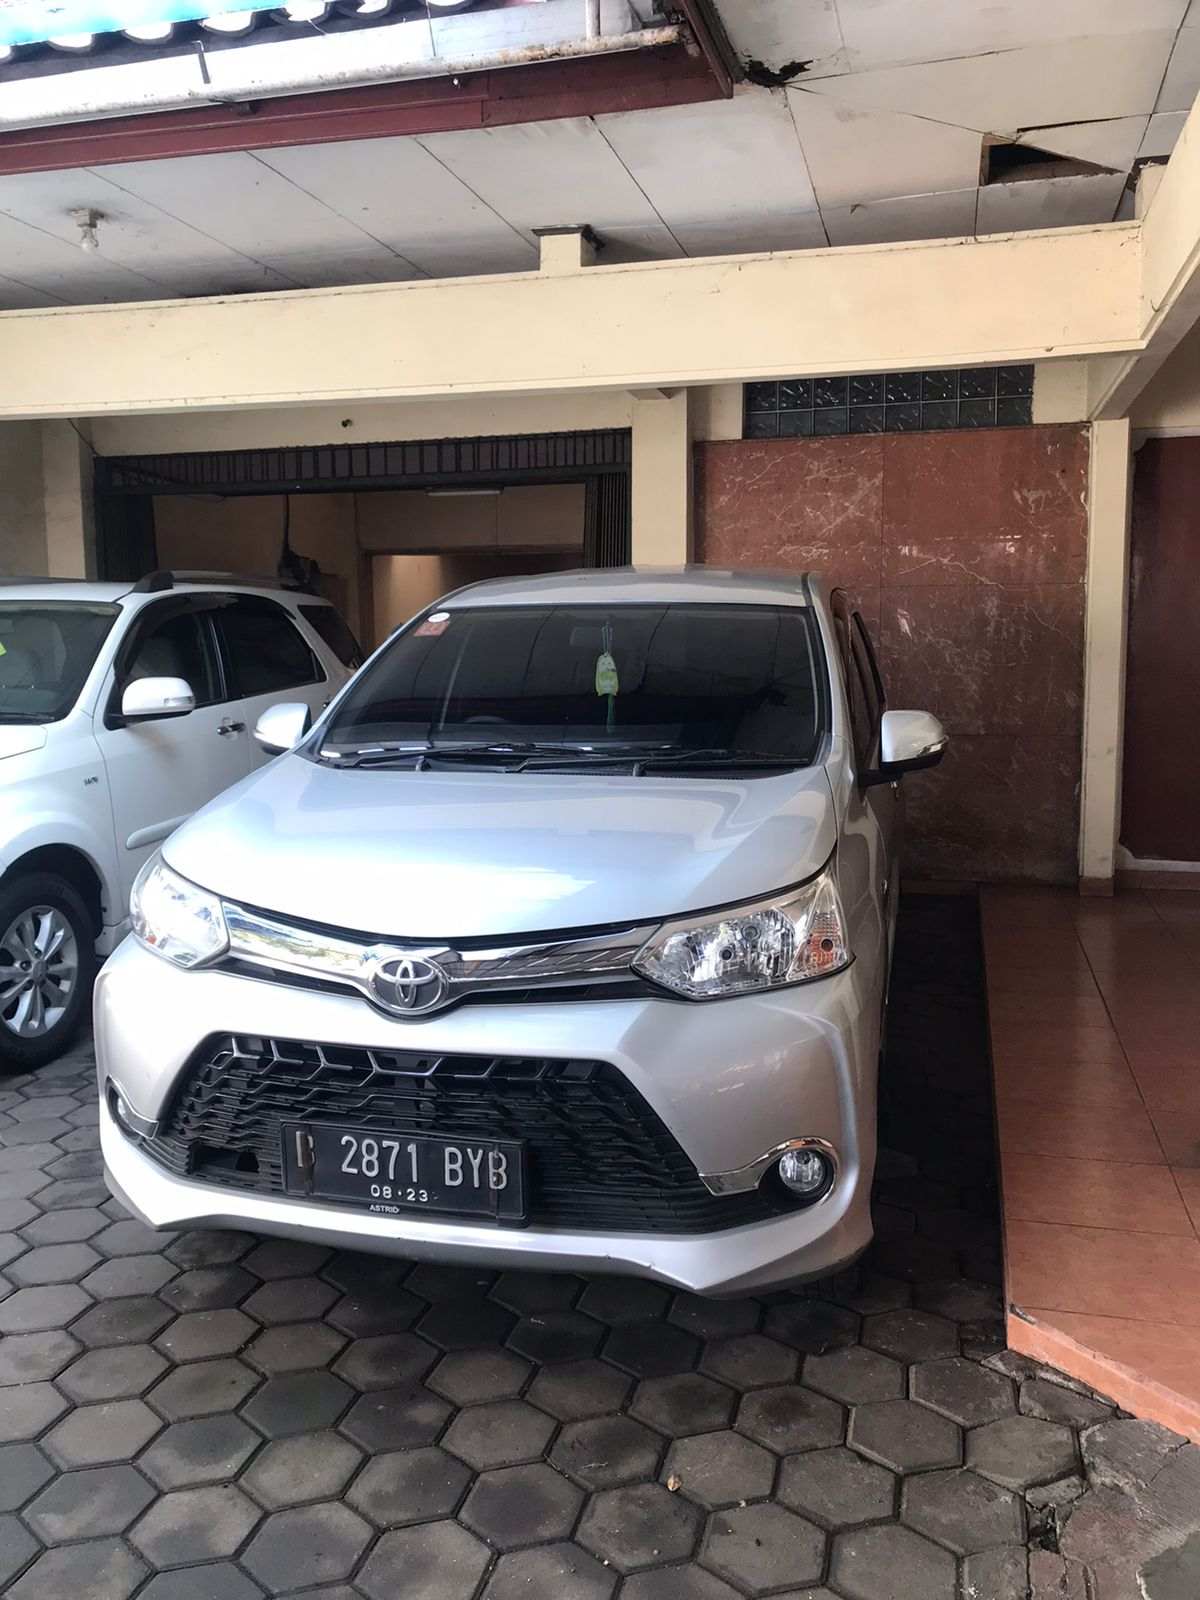 Harga Rental Mobil Avanza Di Cirebon